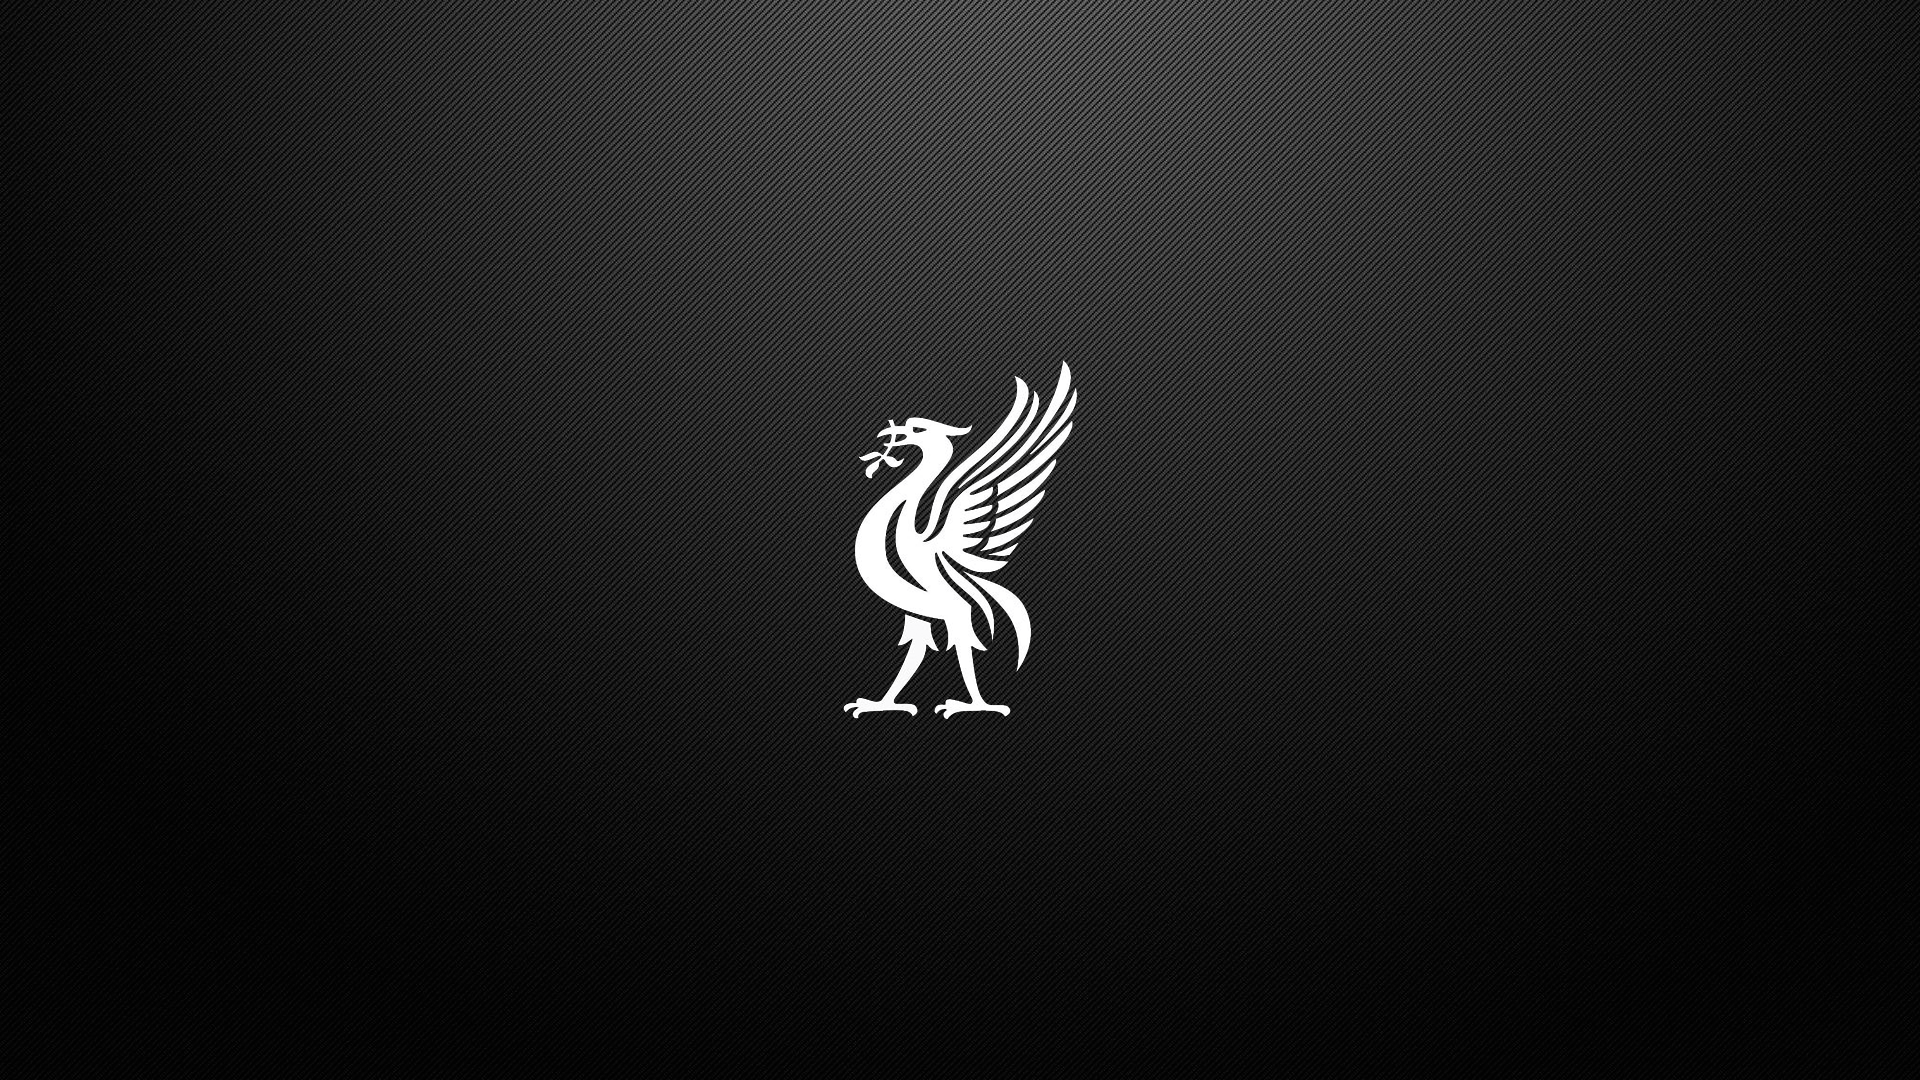 Liverpool FC Desktop Wallpapers - Top Free Liverpool FC ...